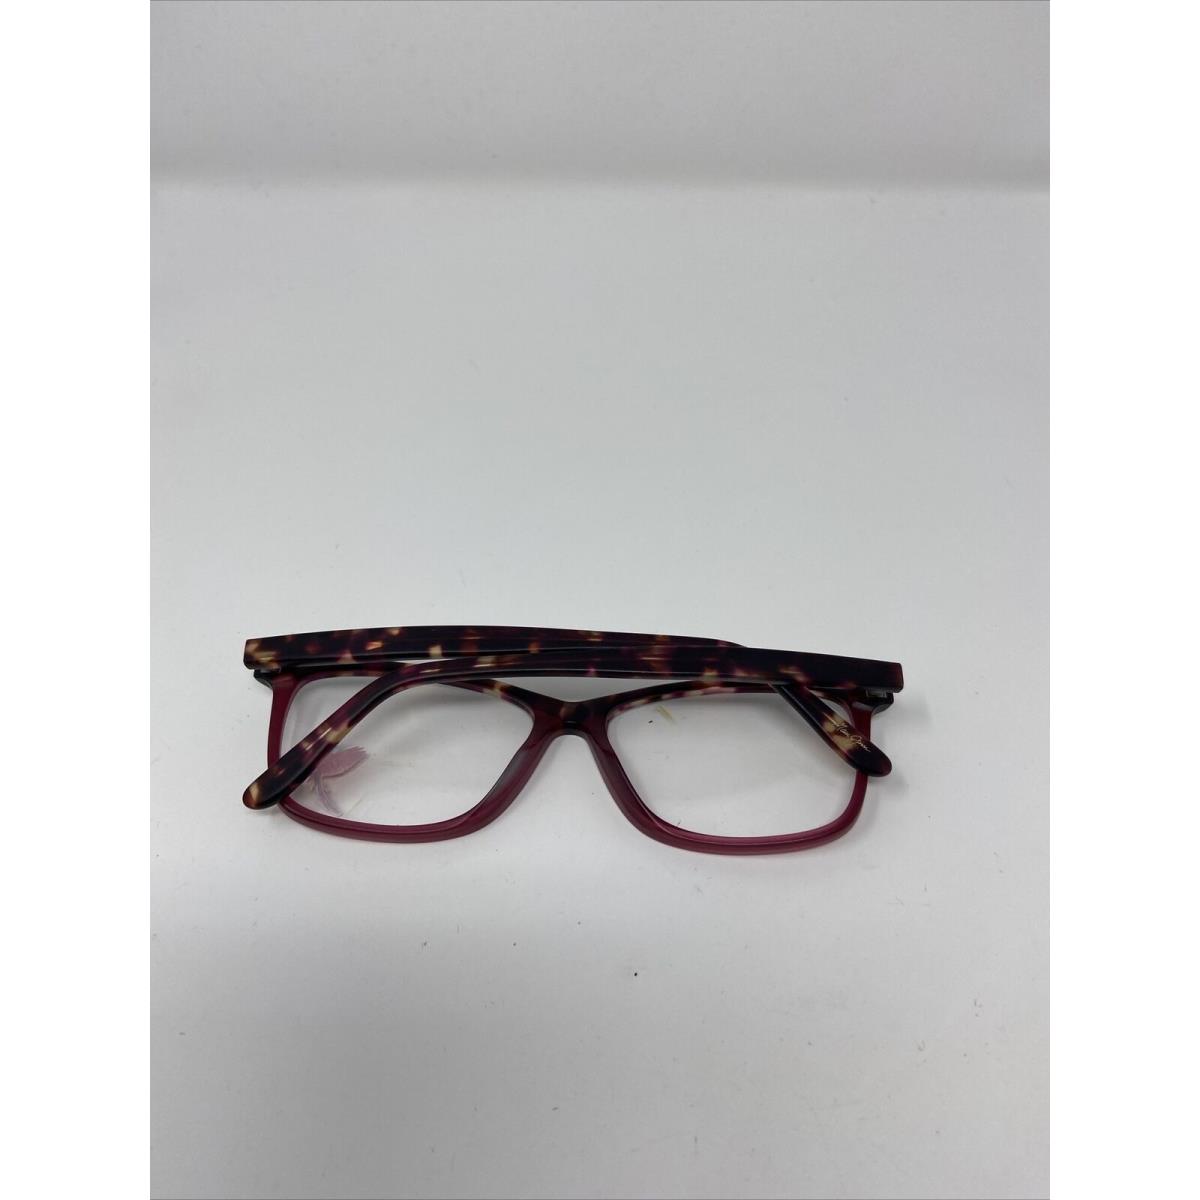 Maui Jim eyeglasses  - Multicolor Frame 7